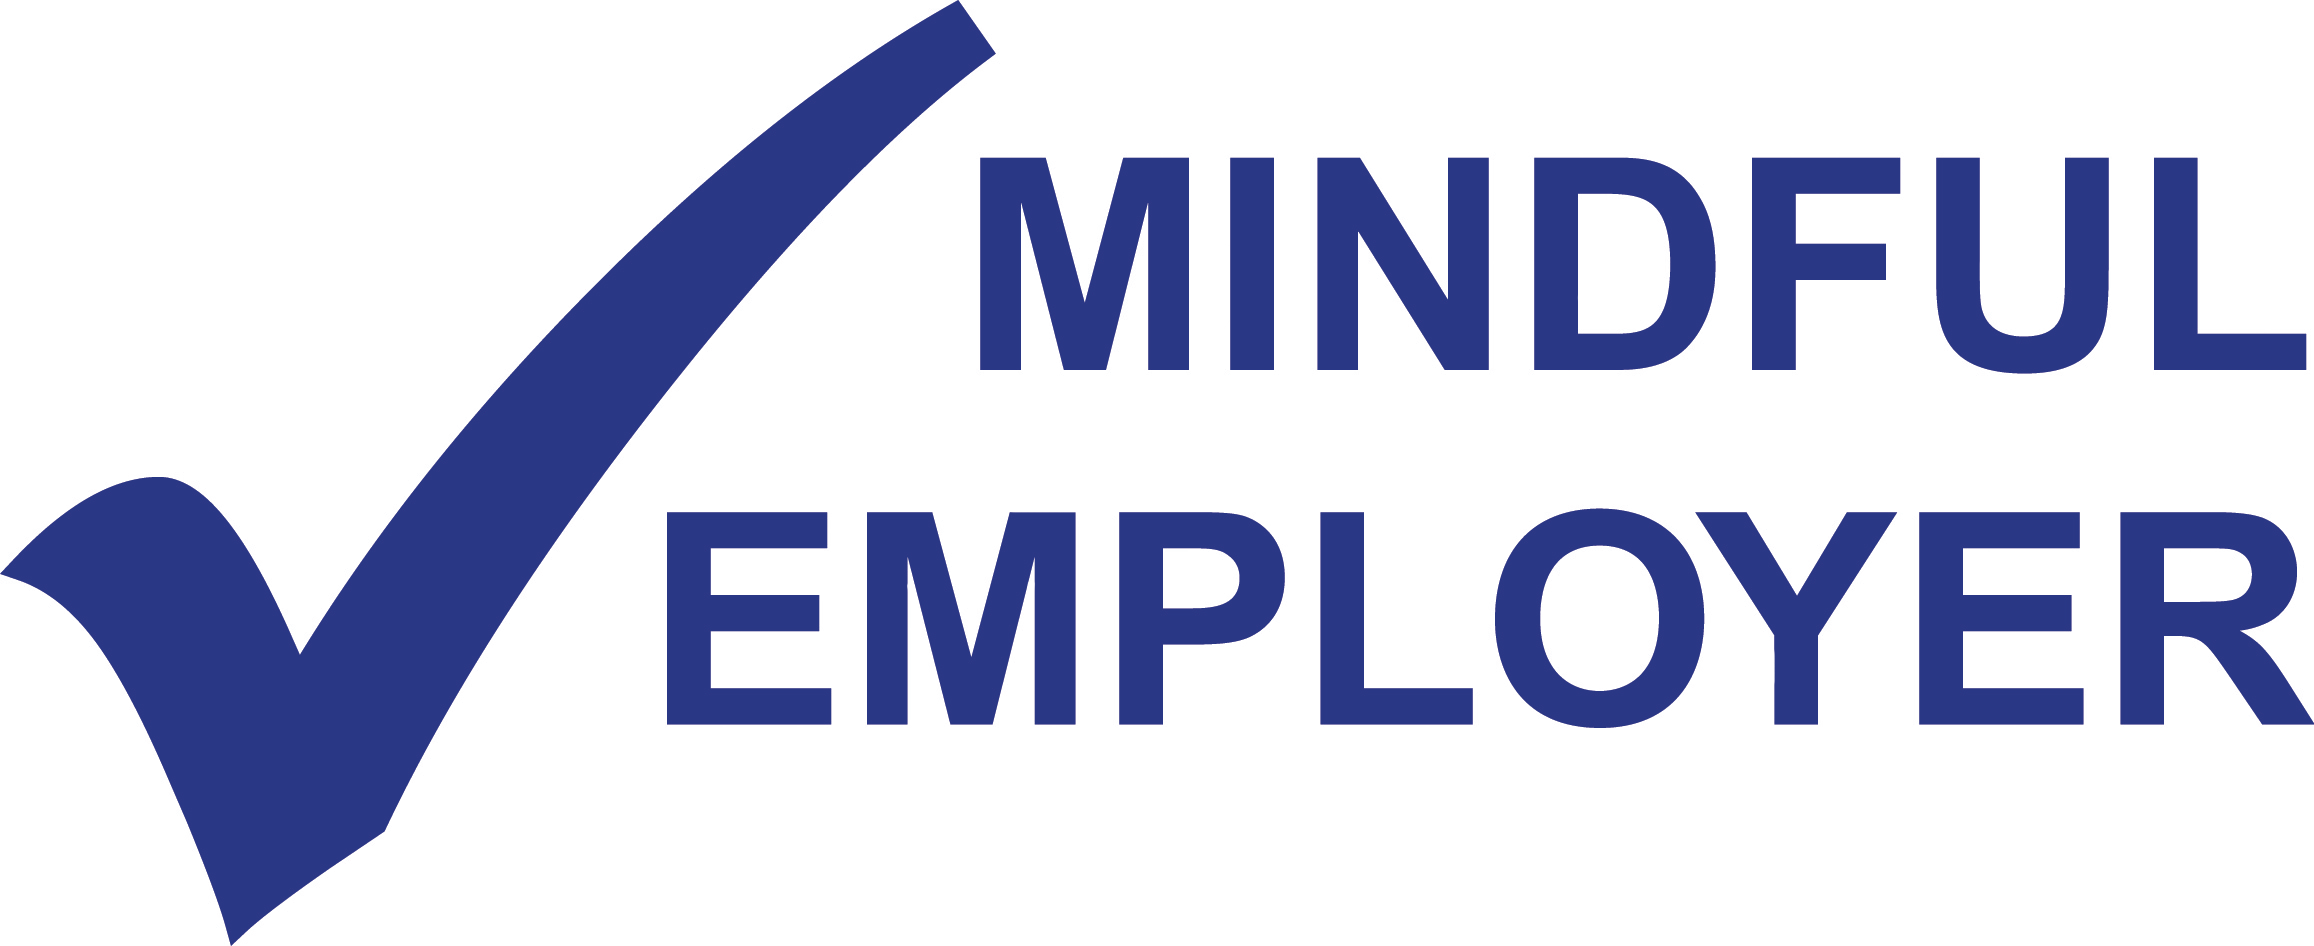 Mindful employer charter logo